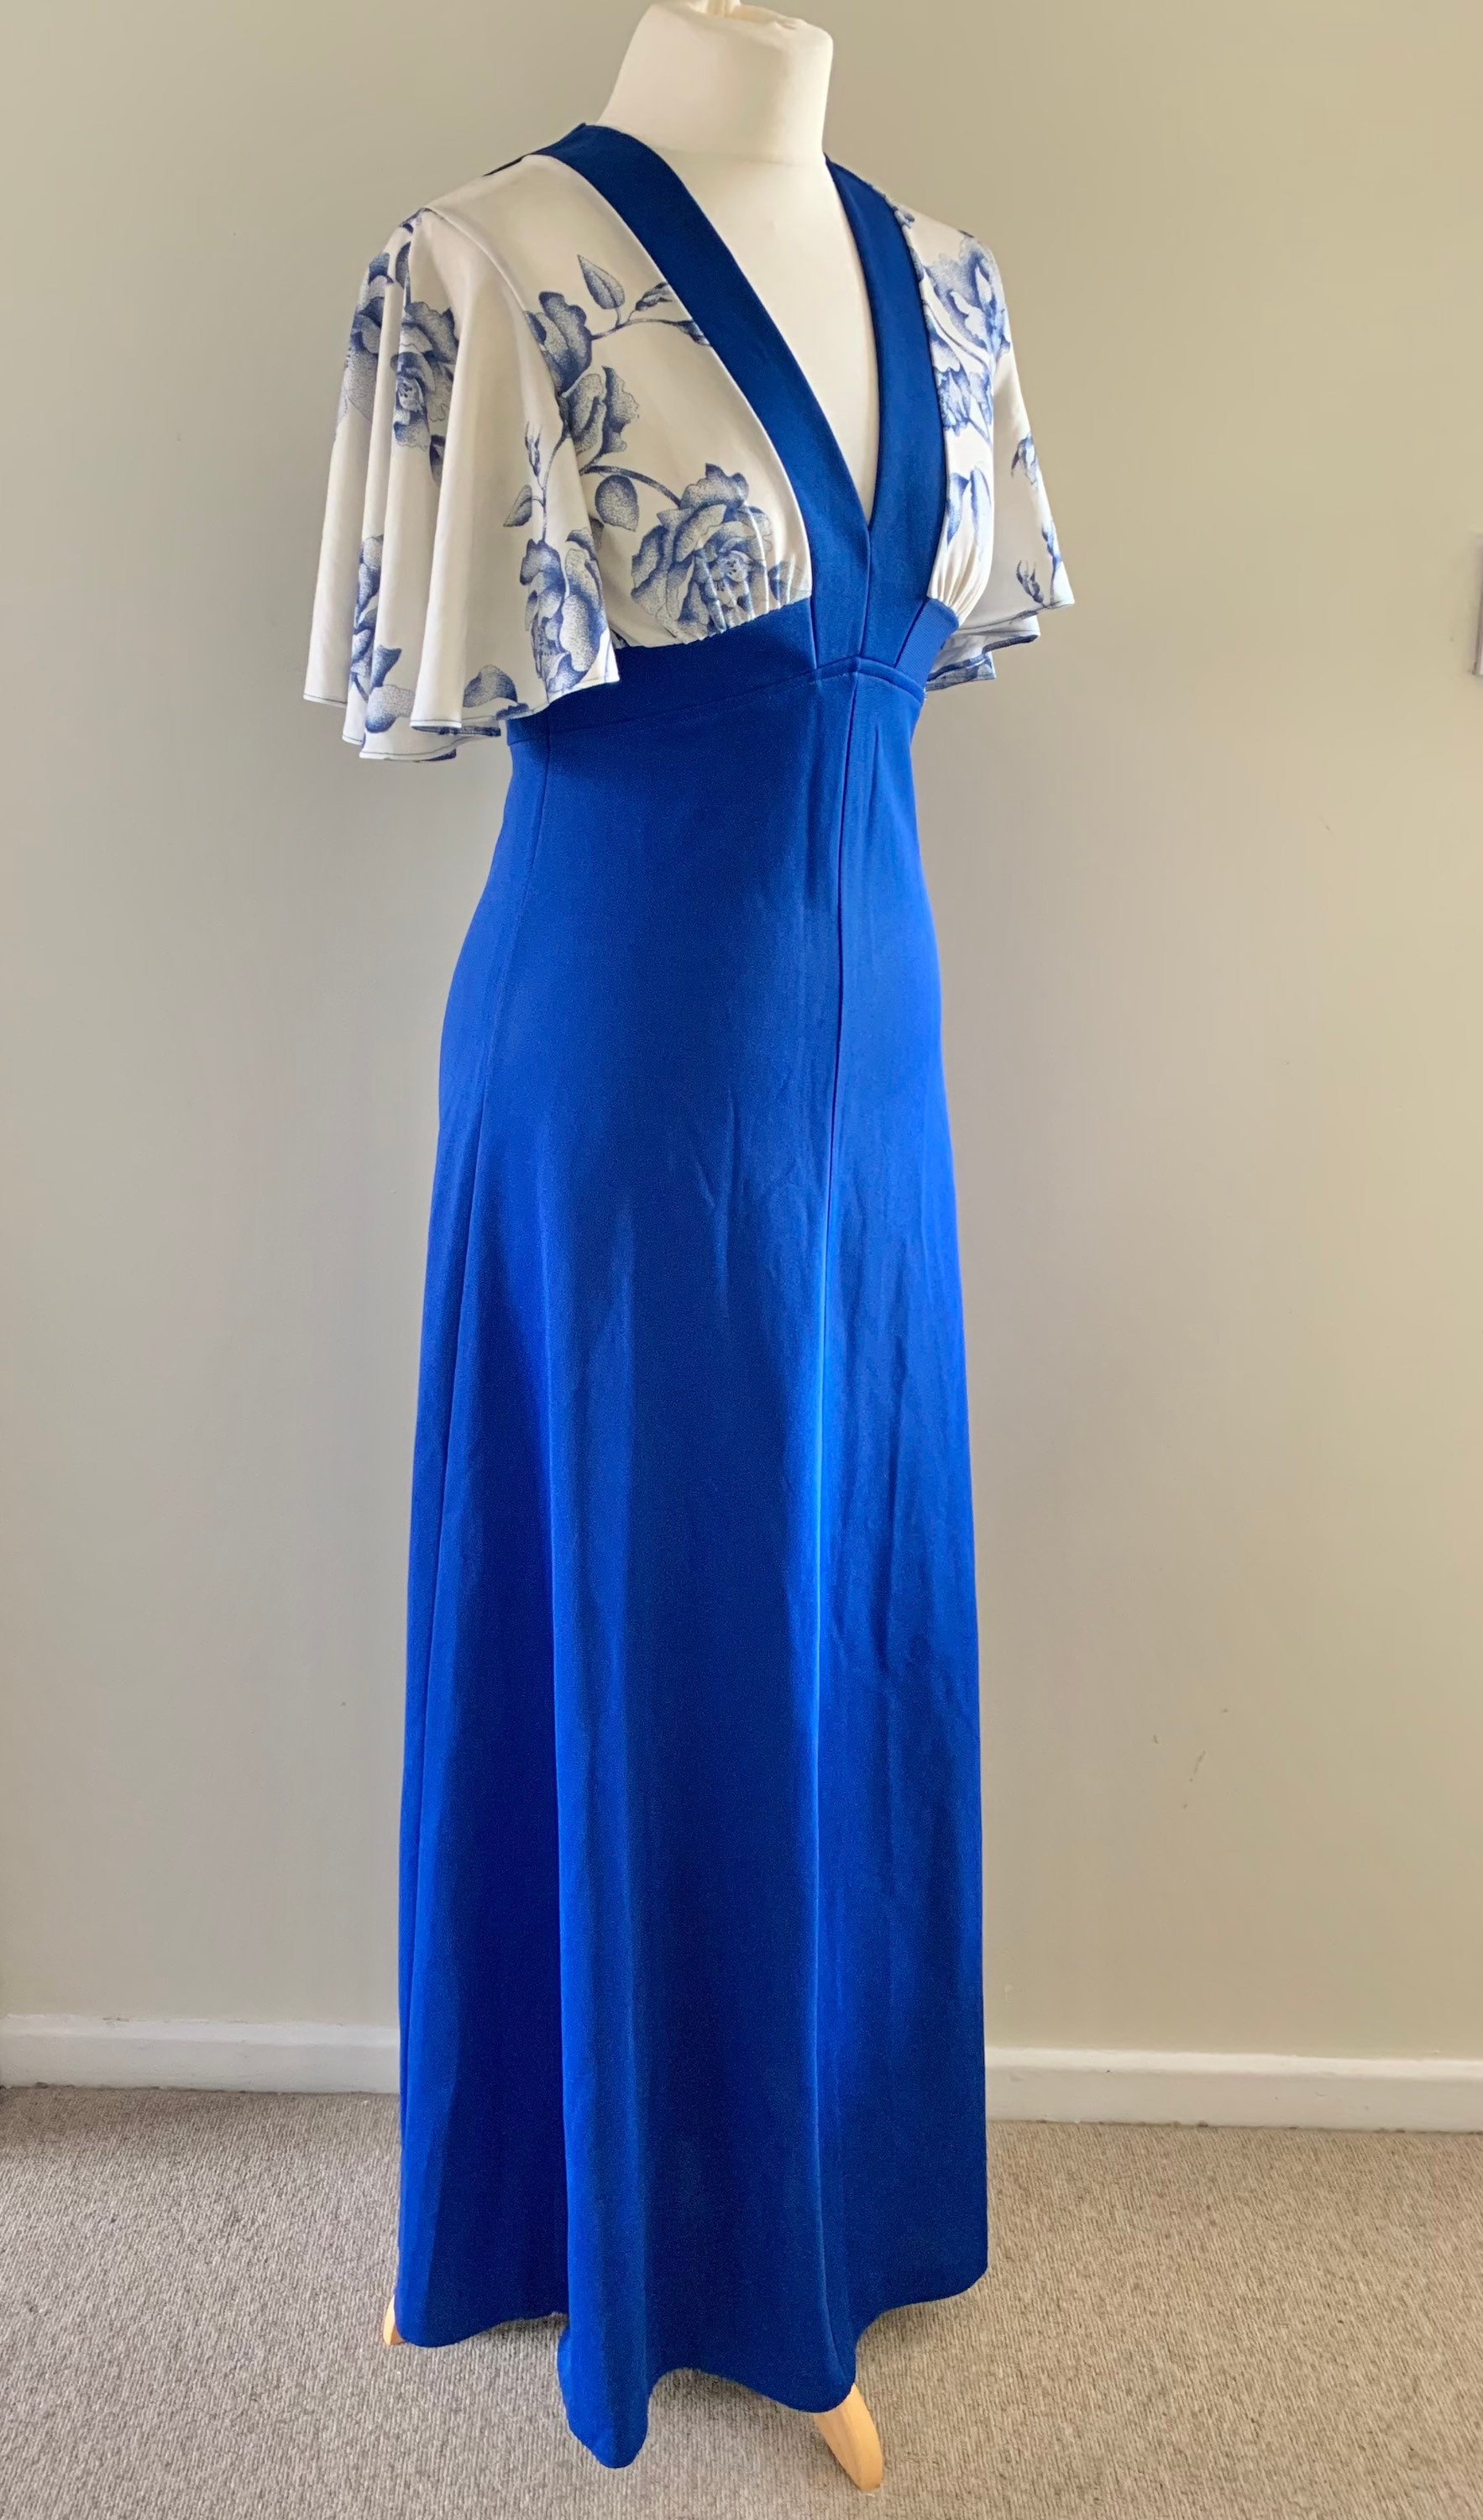 Vintage crimplene blue and white maxi dress c 1960s or 1970s, long ...